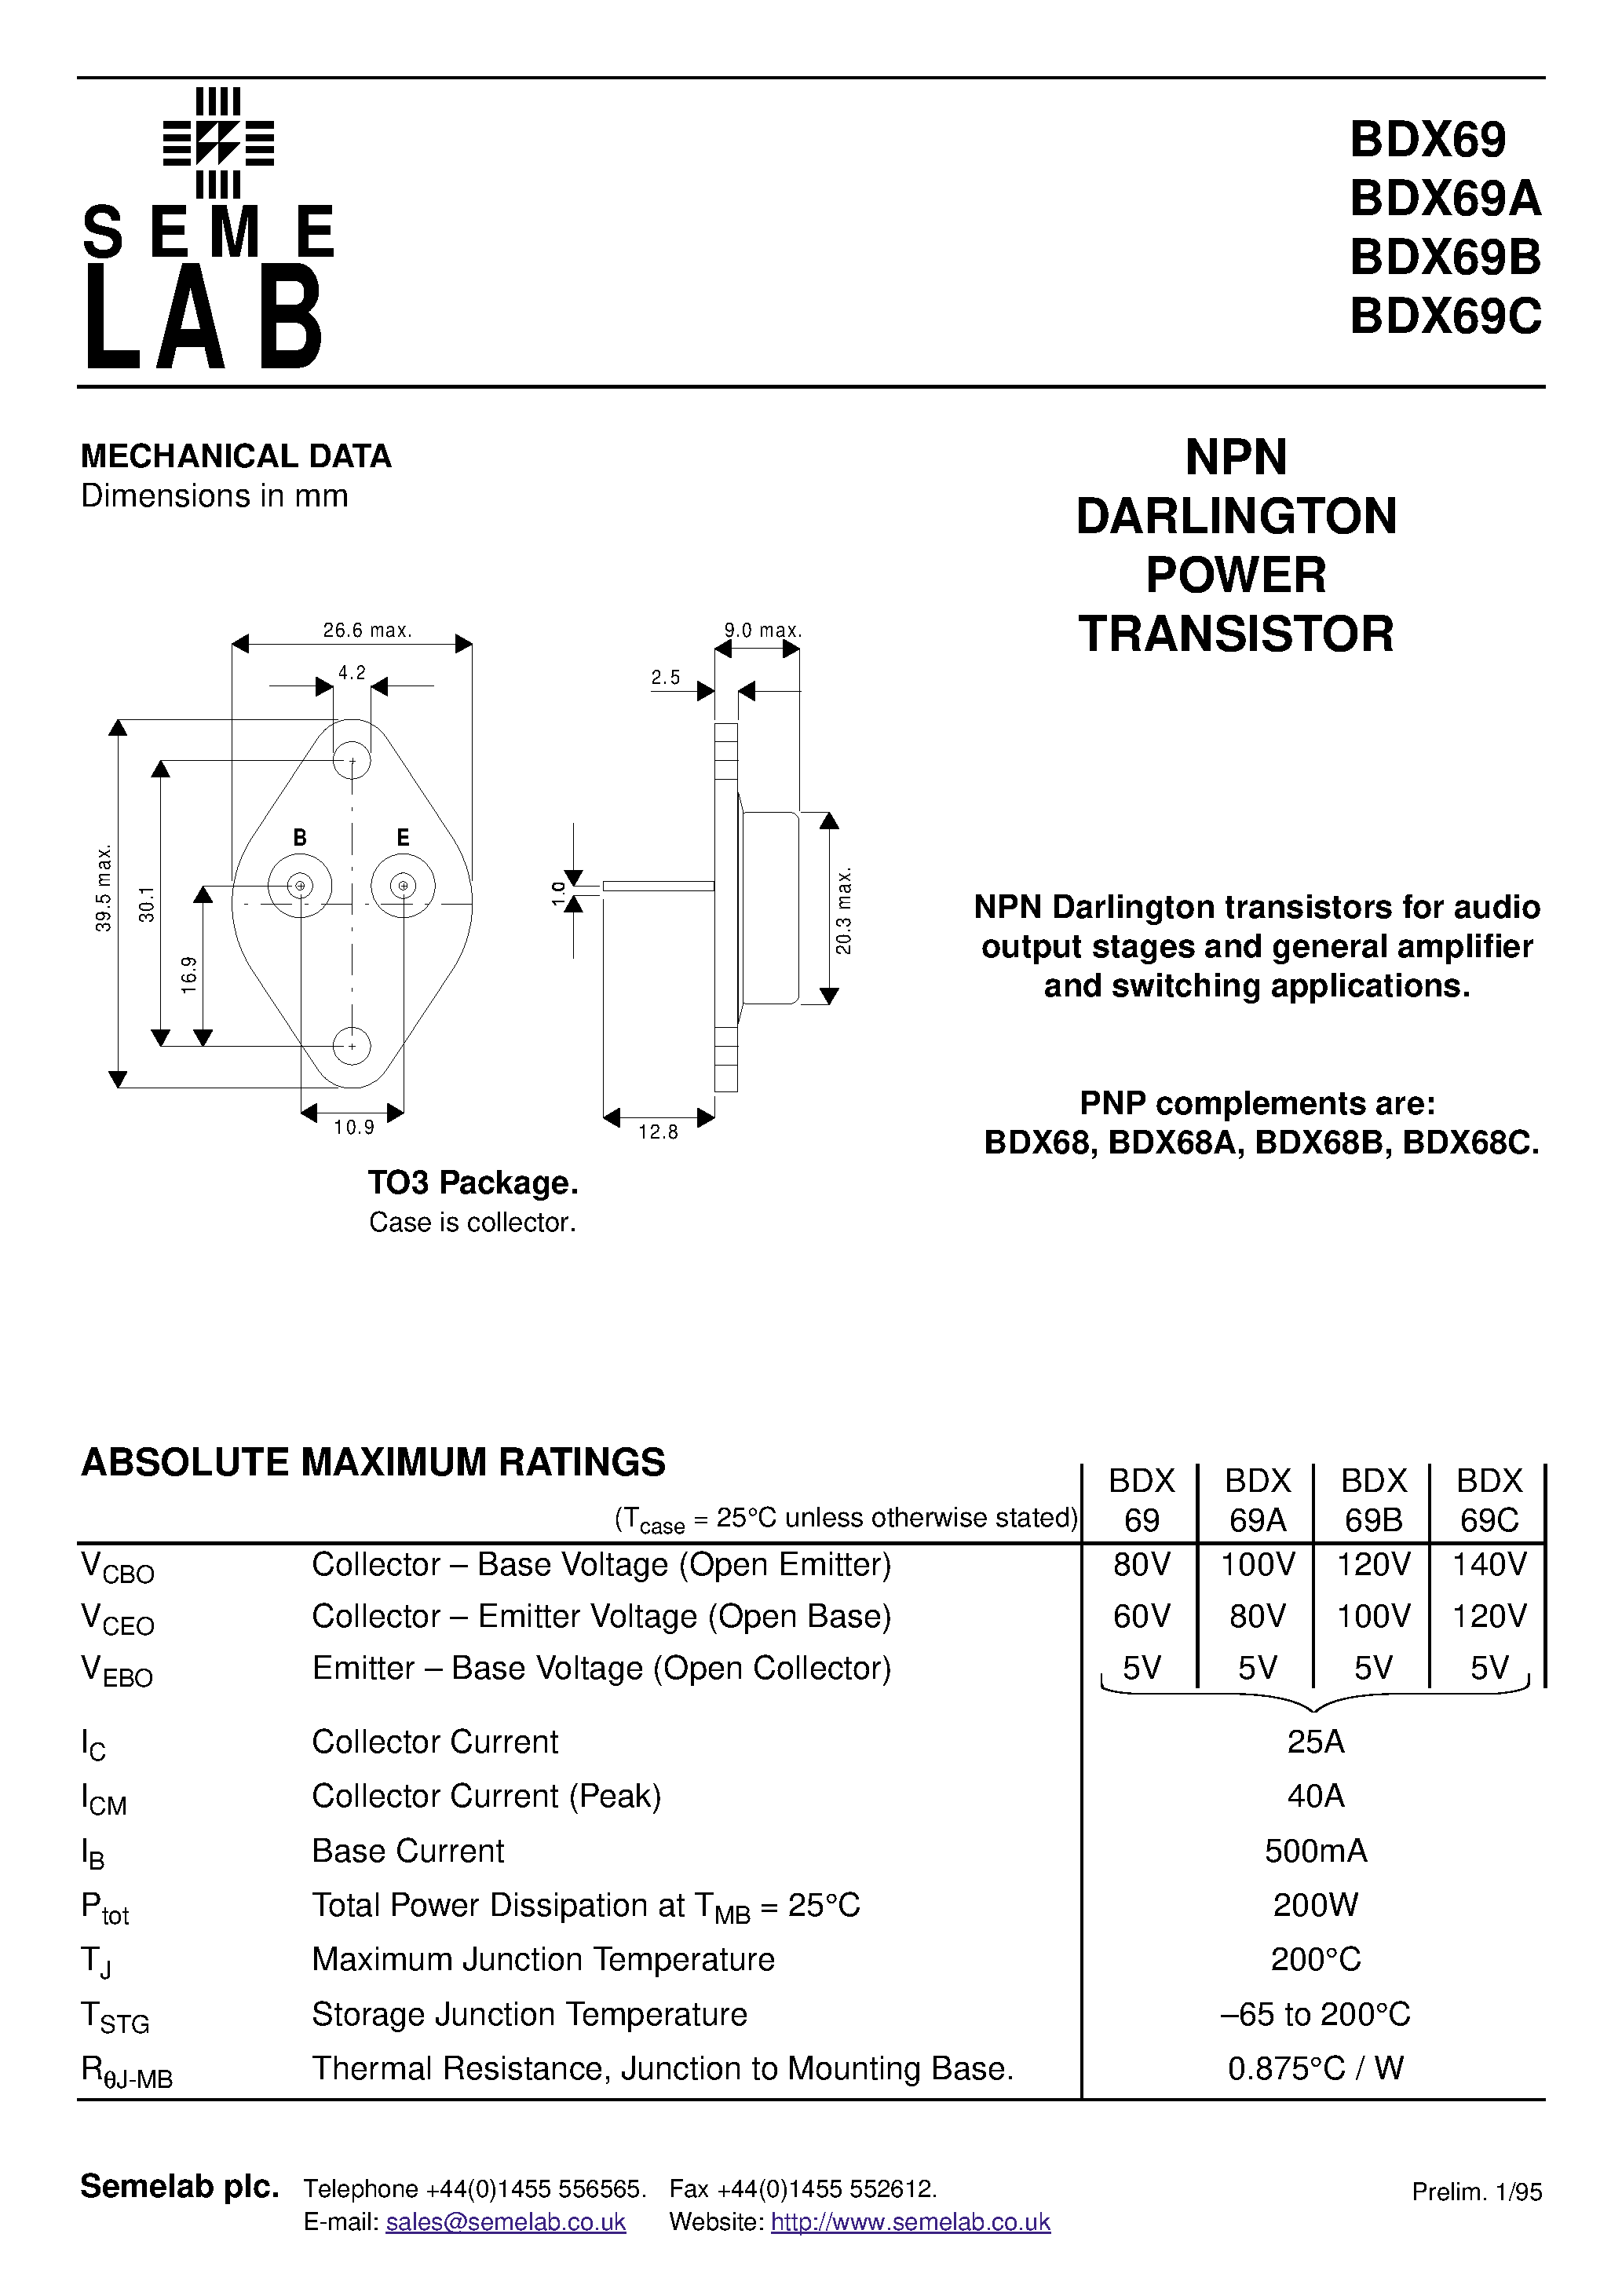 Datasheet BDX69A - NPN DARLINGTON POWER TRANSISTOR page 1